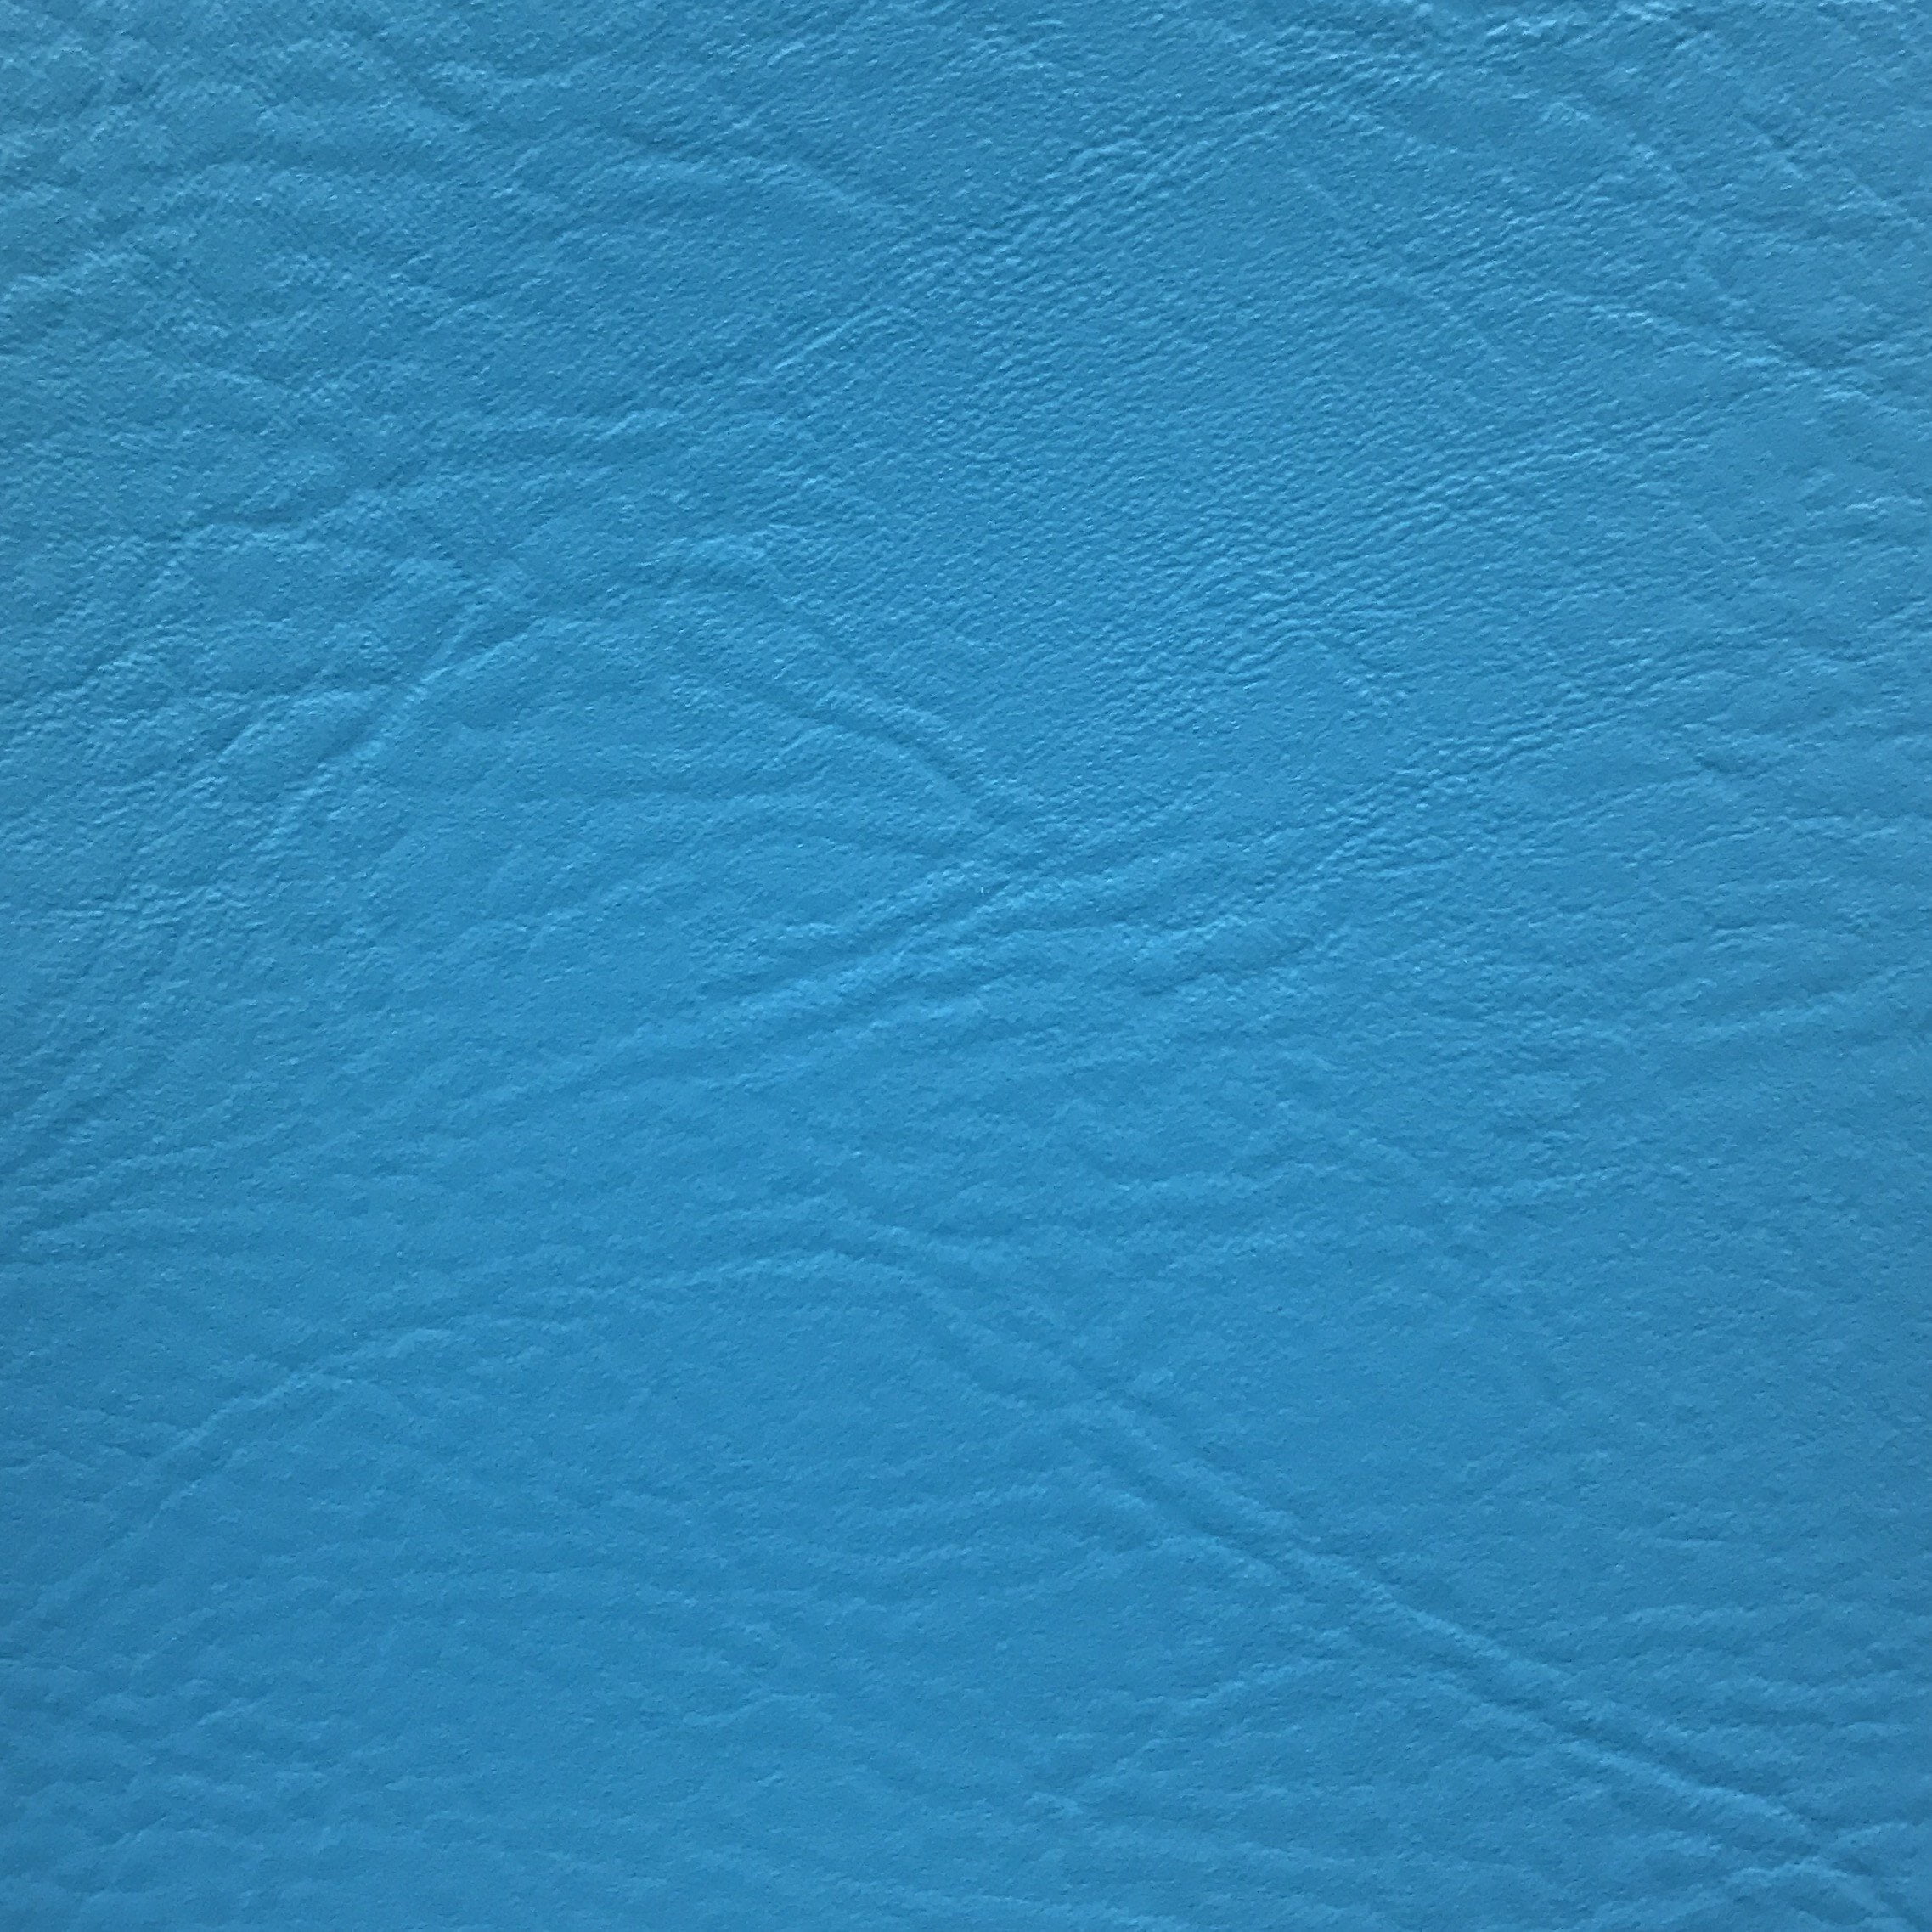 Wholesale OLYCRAFT 39.4x16.9 Inch Royal Blue Imitation Leather